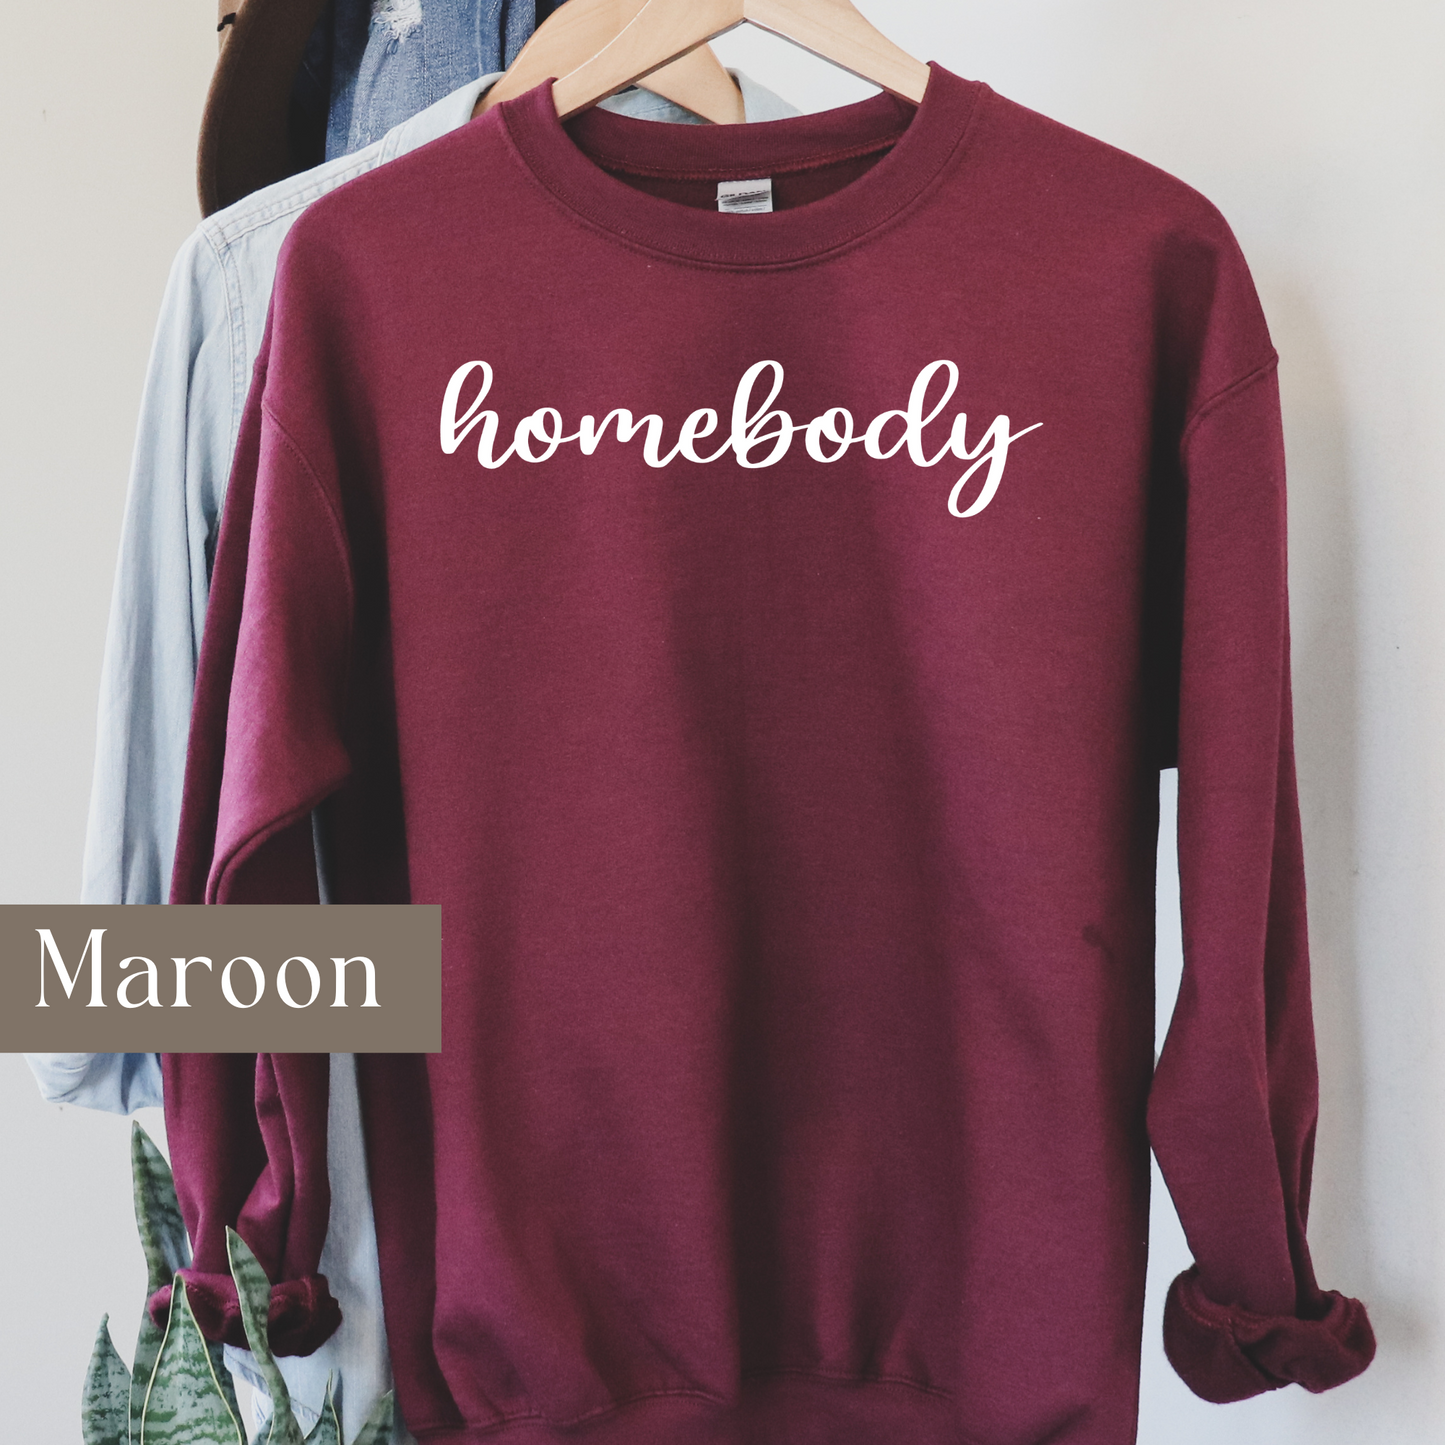 Homebody - Sweatshirt